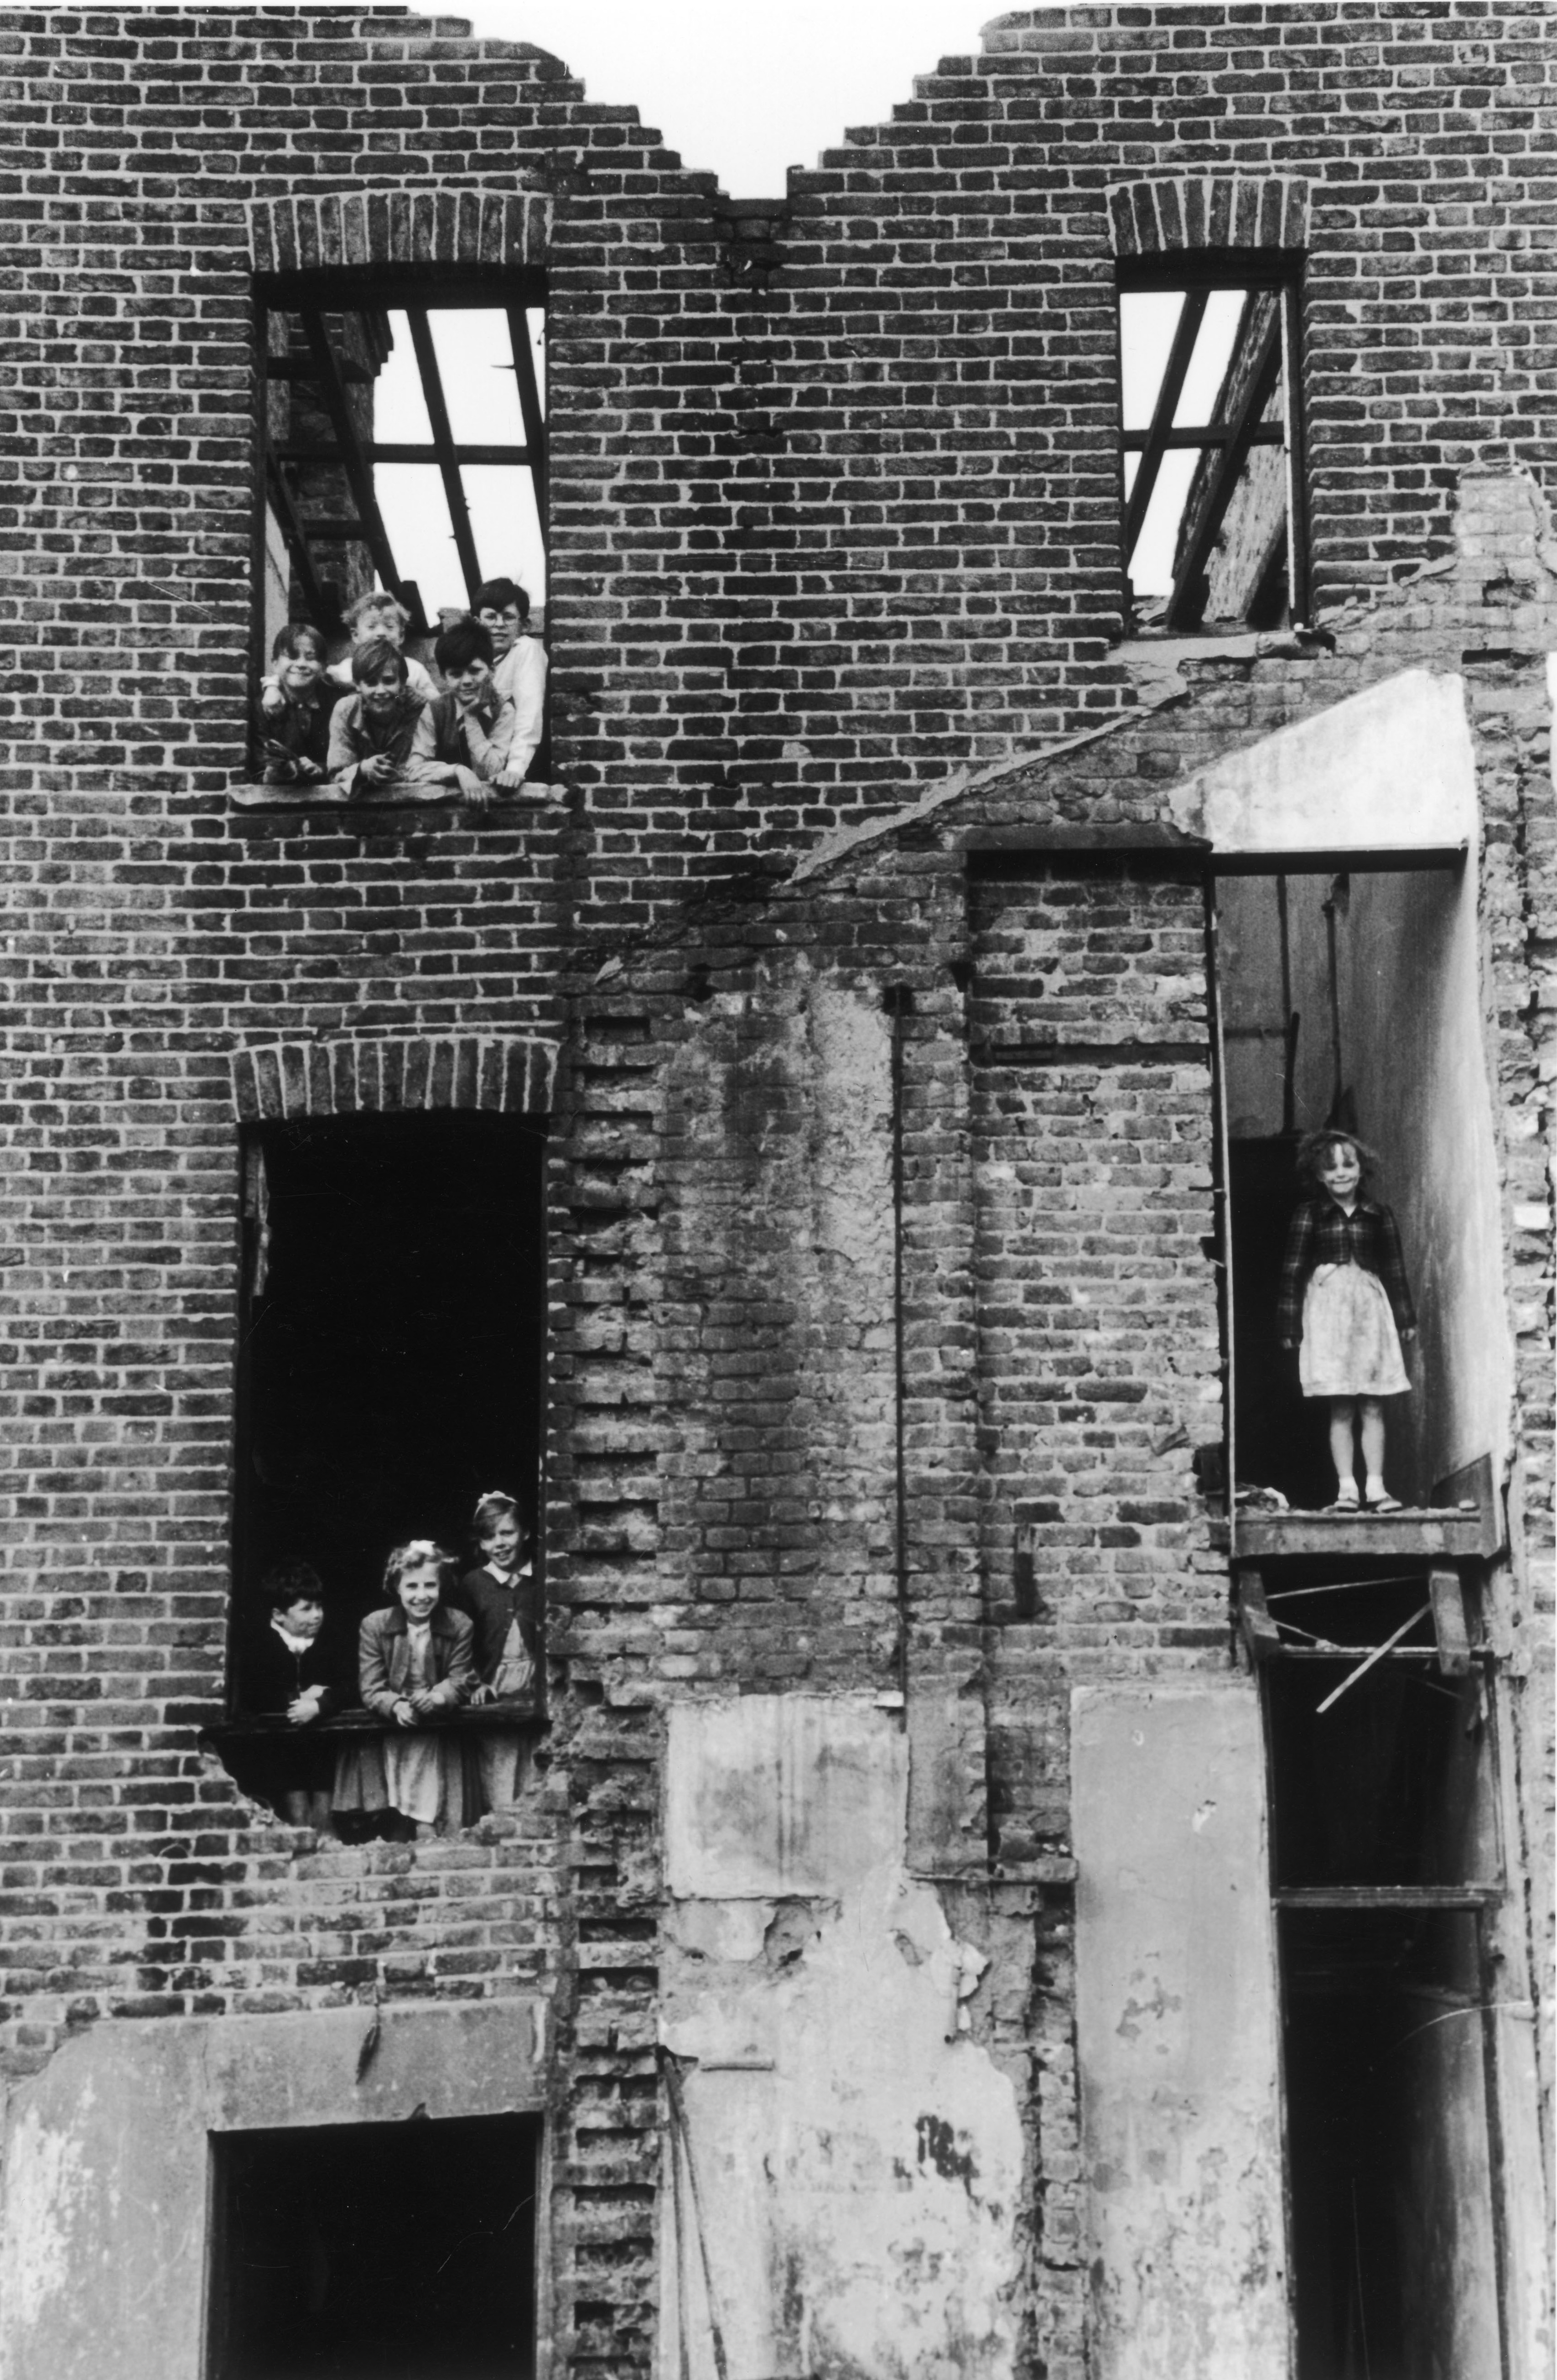 7. Children In A Bombed Building, Bermondsey, London, 1954